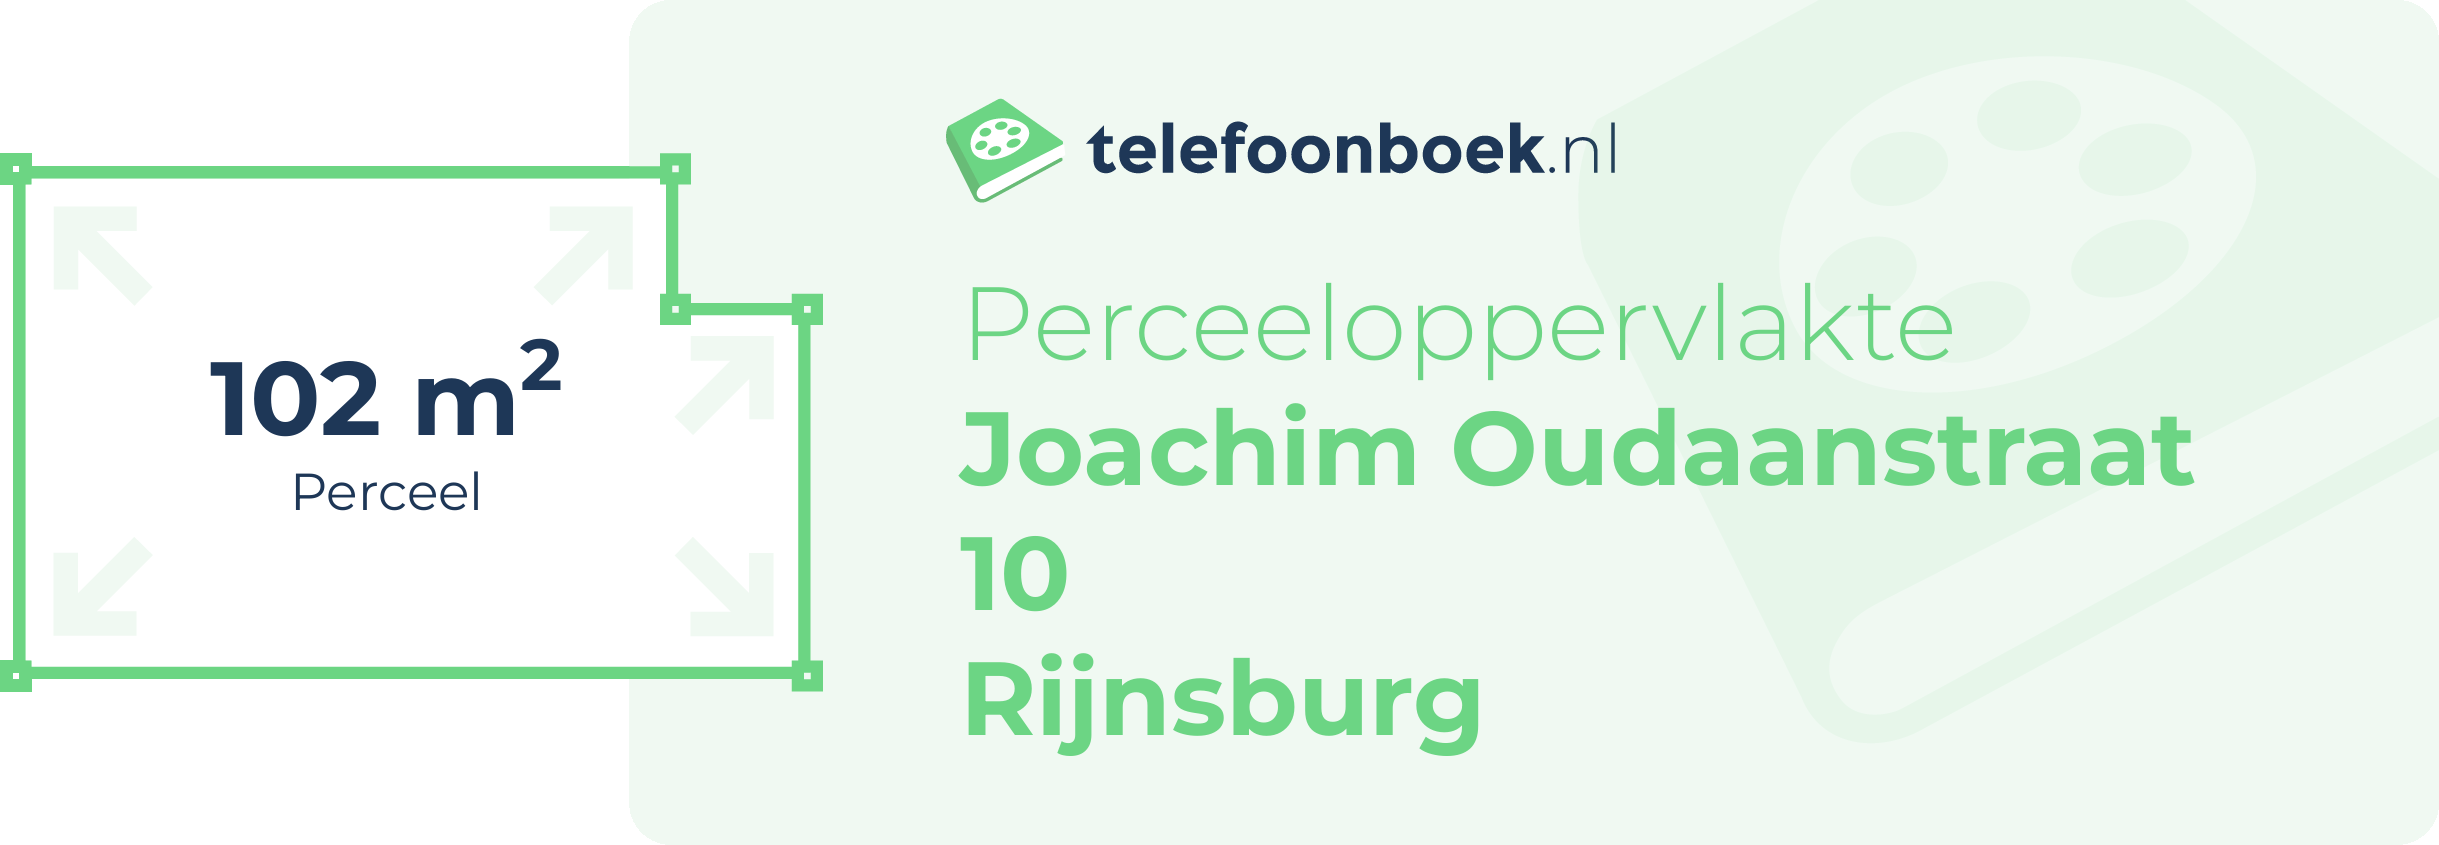 Perceeloppervlakte Joachim Oudaanstraat 10 Rijnsburg